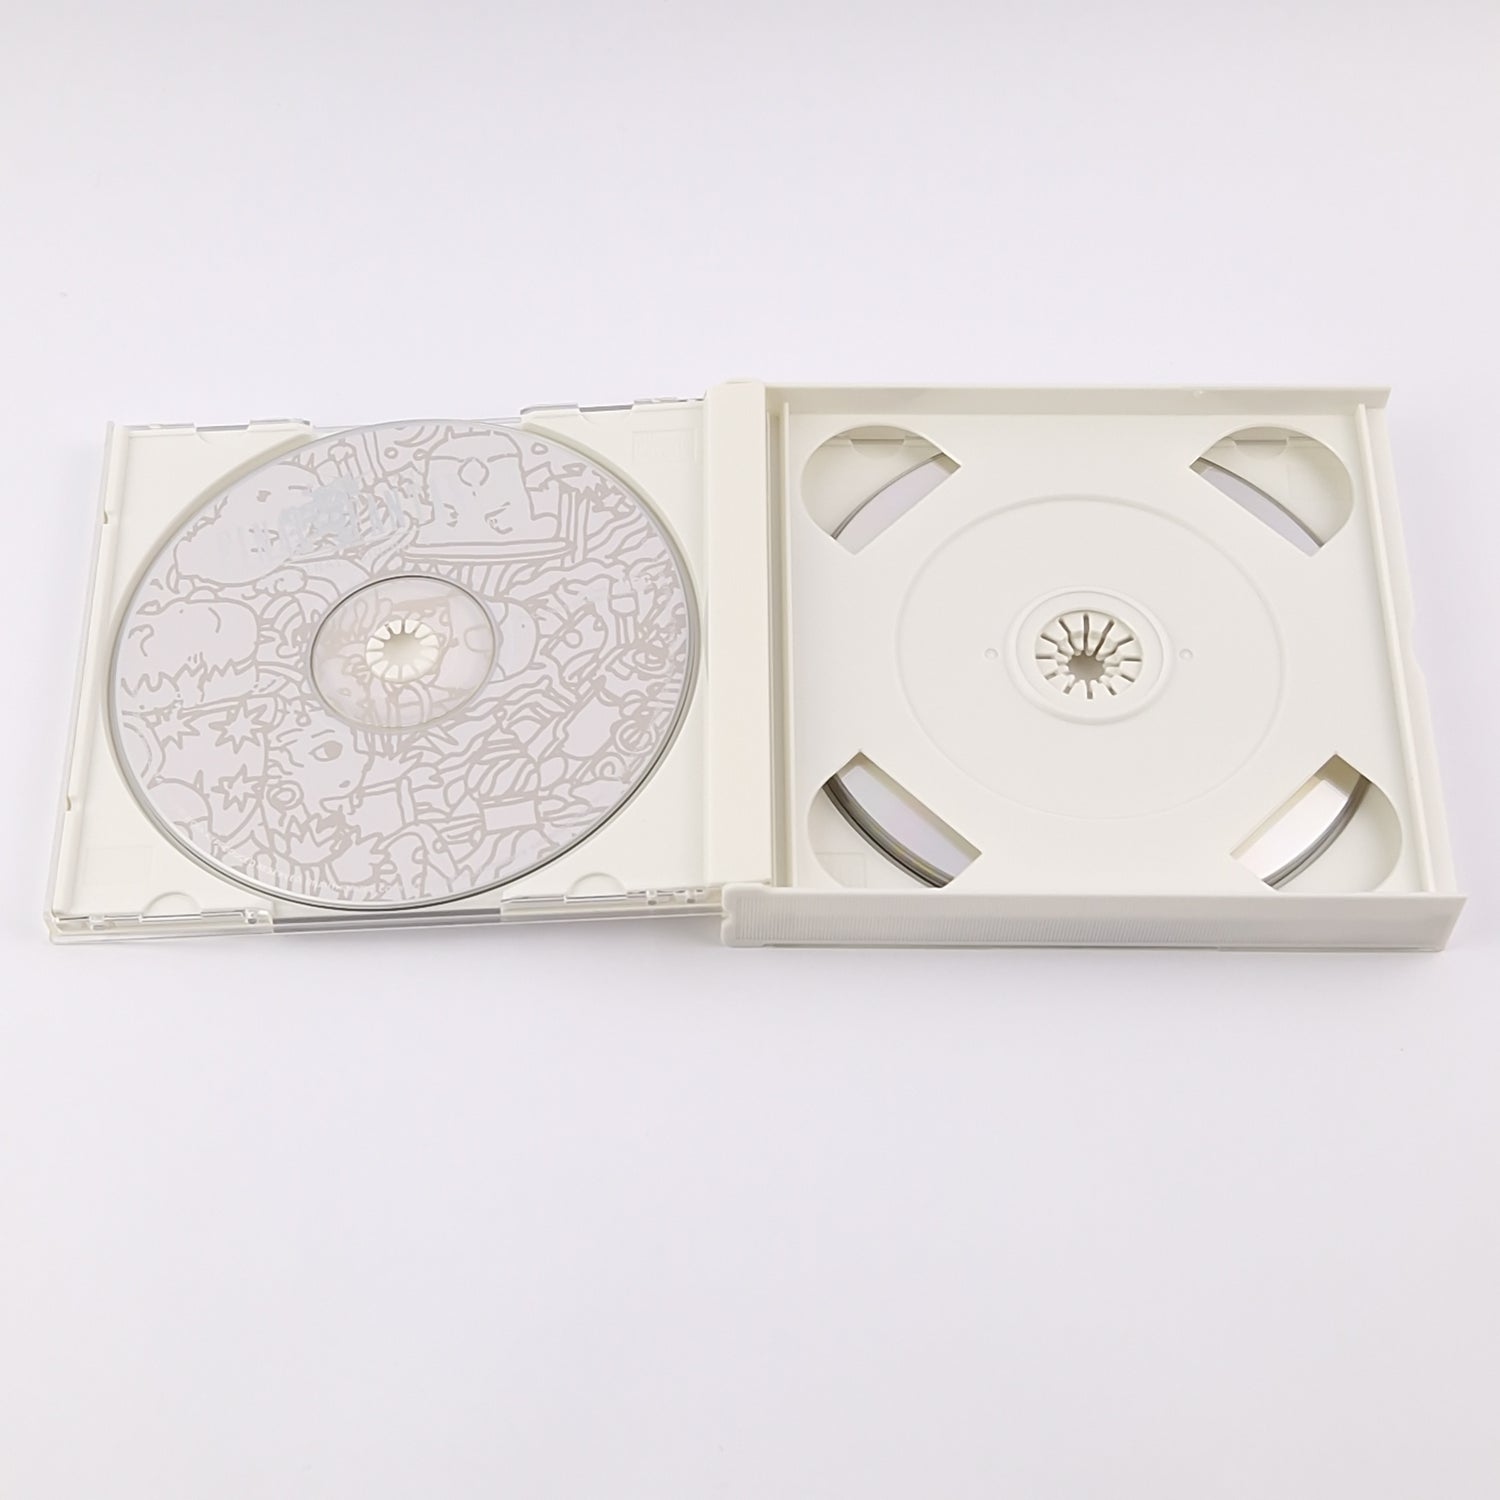 Original Video Game Soundtrack: Final Fantasy VI 6 - Music CD - Polystar